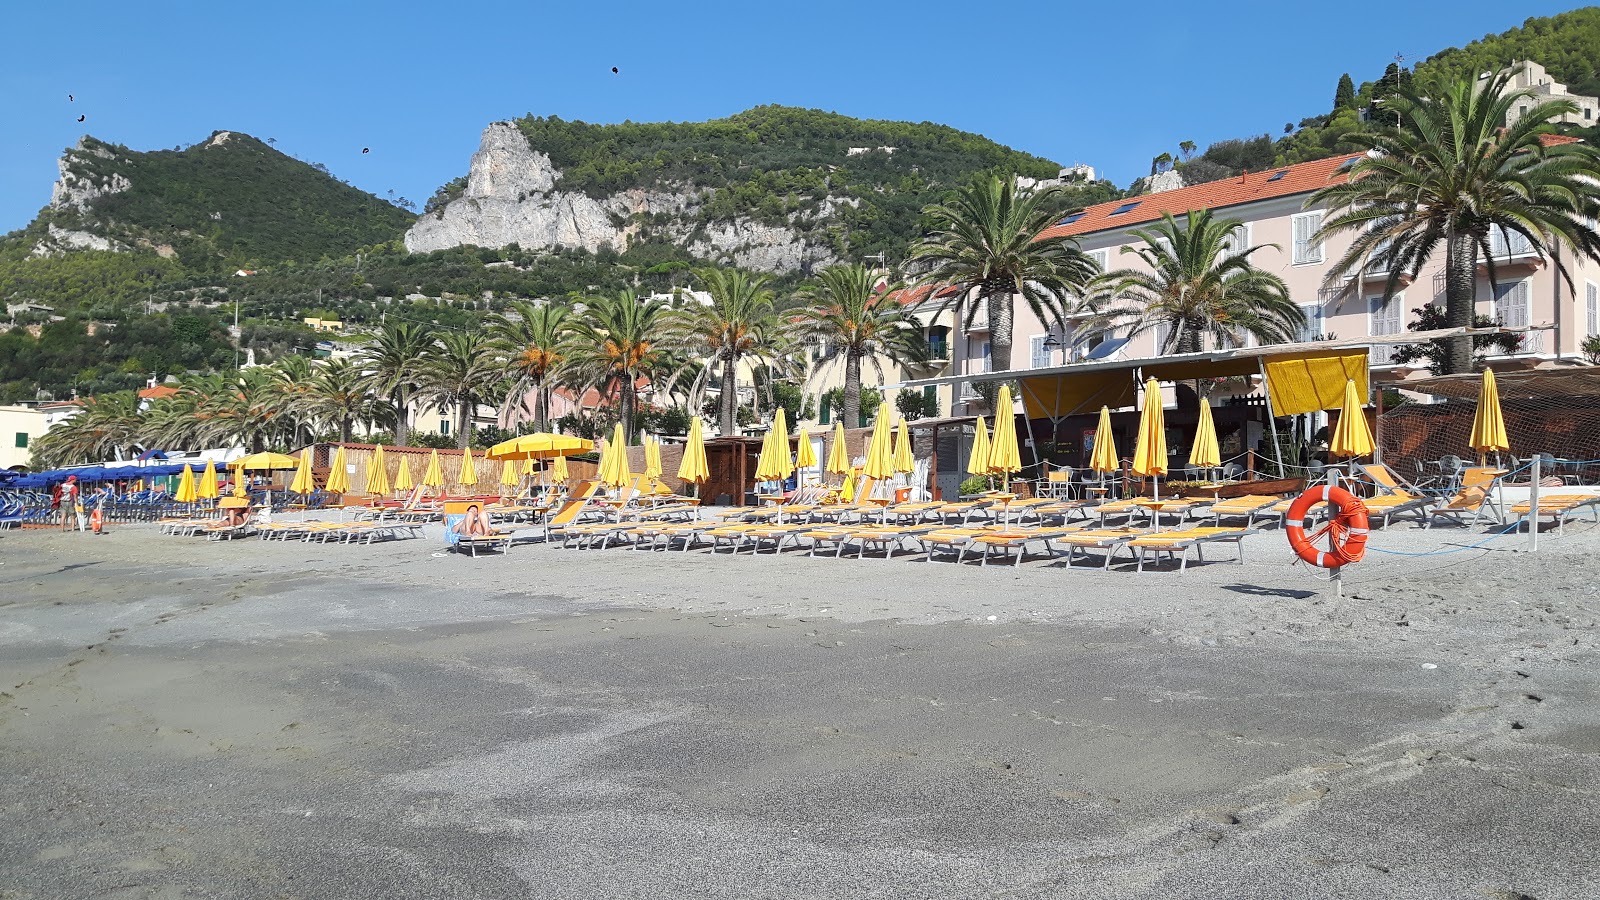 Fotografie cu Spiaggia libera di Varigotti - locul popular printre cunoscătorii de relaxare